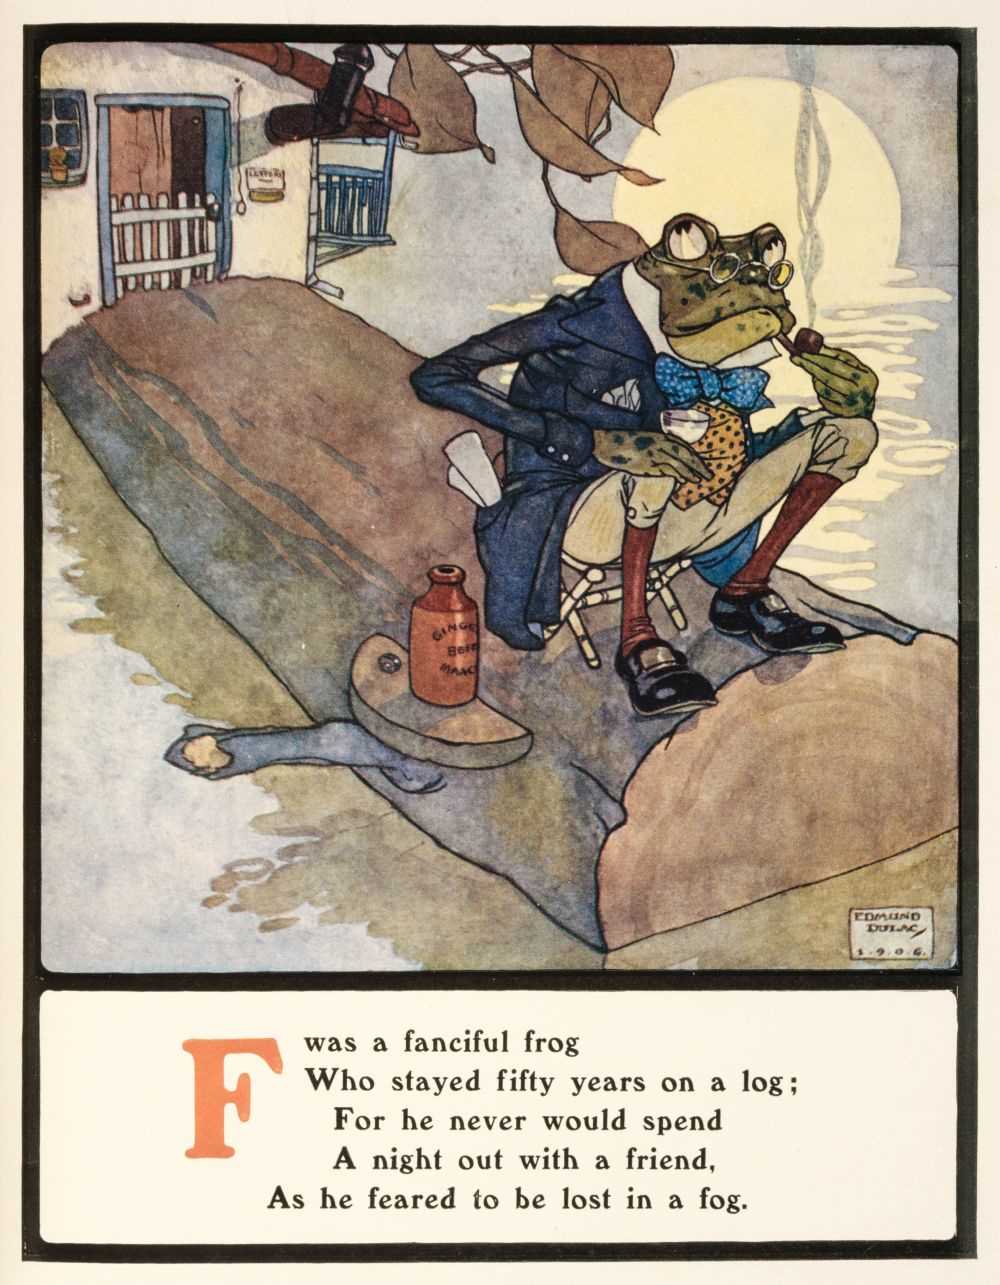 Lot 671 - Dulac (Edmund). Lyrics Pathetic & Humorous, 1908